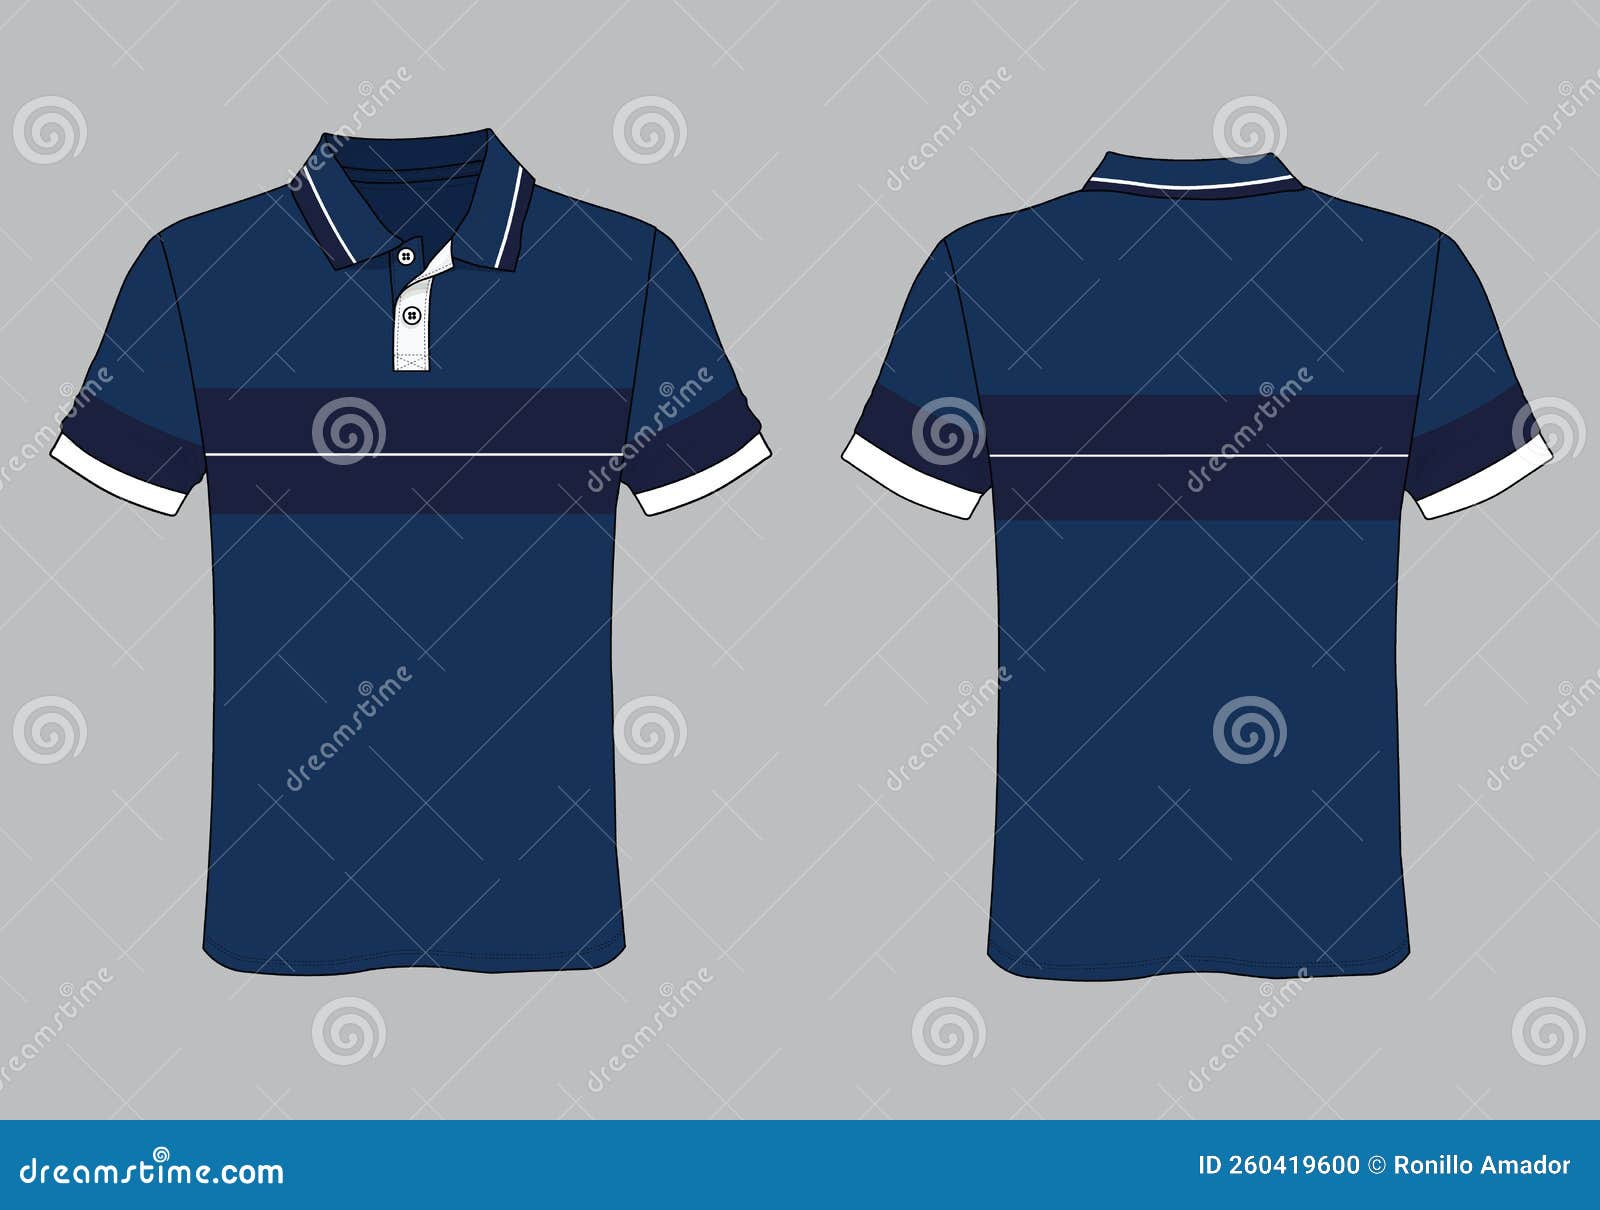 Polo Shirt Template Design Mockup Stock Vector - Illustration of ...